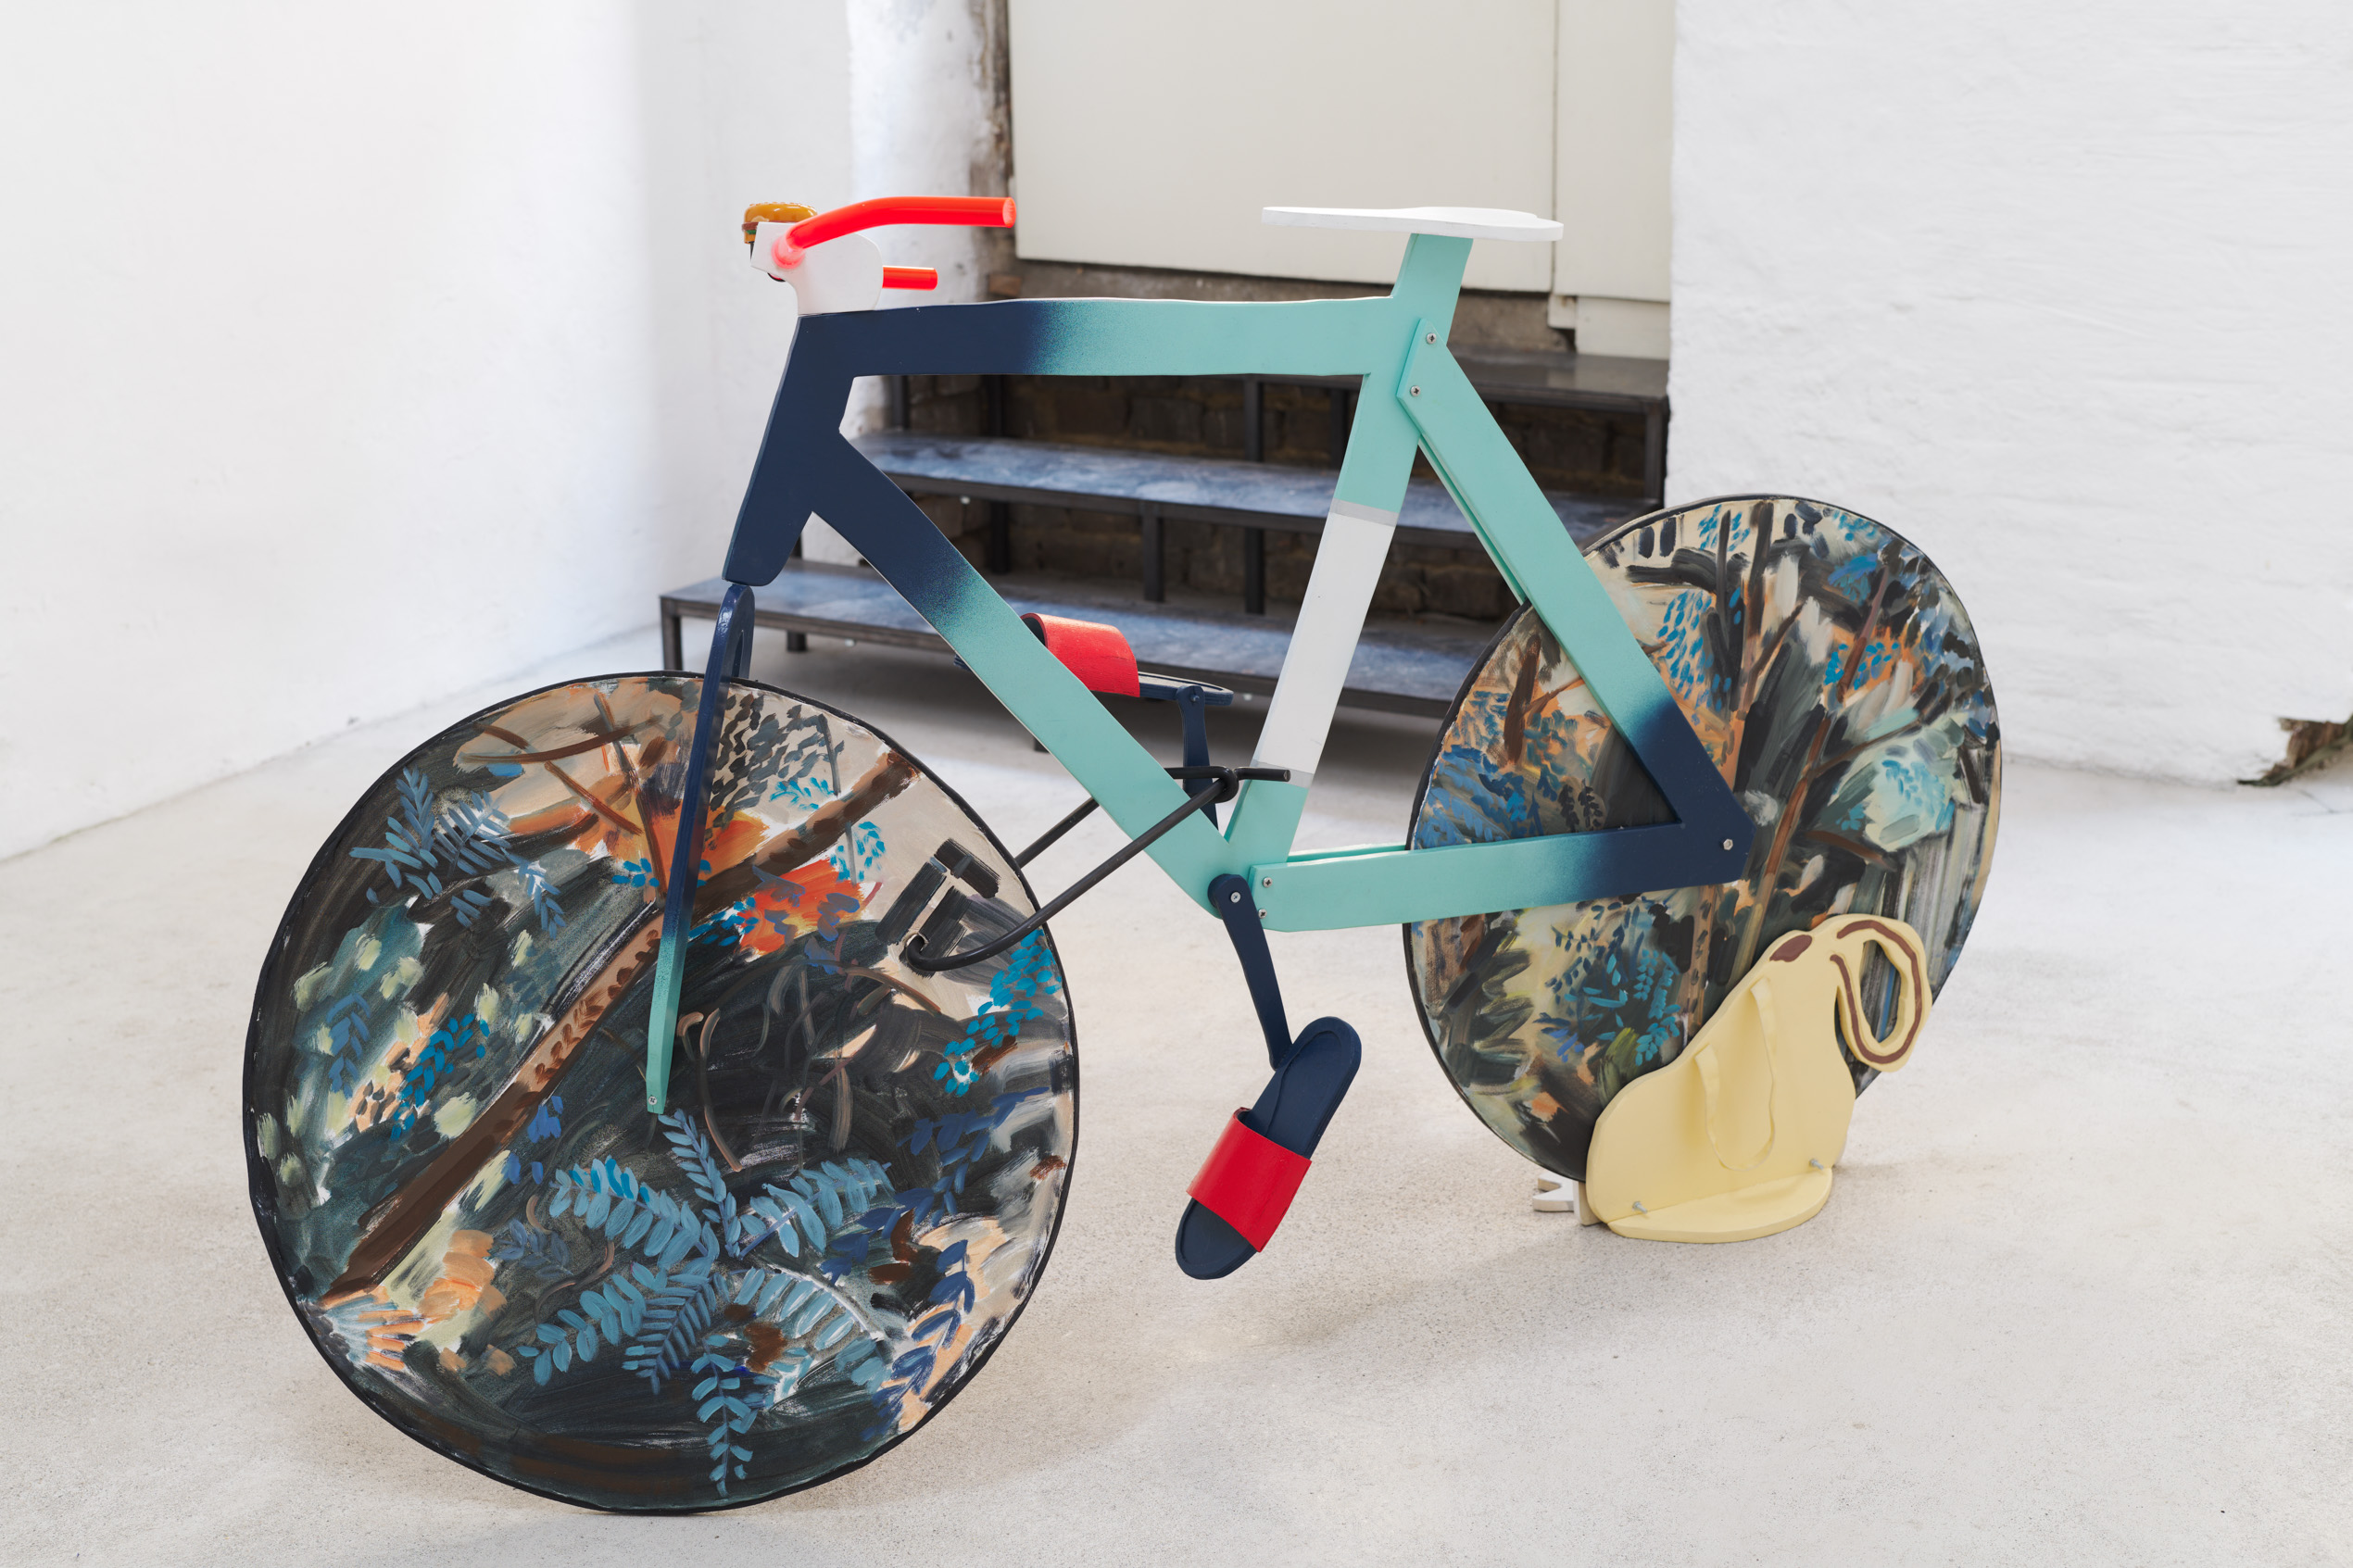 Ellinor Aurora Aasgaard and Elizabeth Ravn, Celeste, 2019, 173 x 60 x 100 cm, wood, oil paint, plastic, canvas, bicycle bell